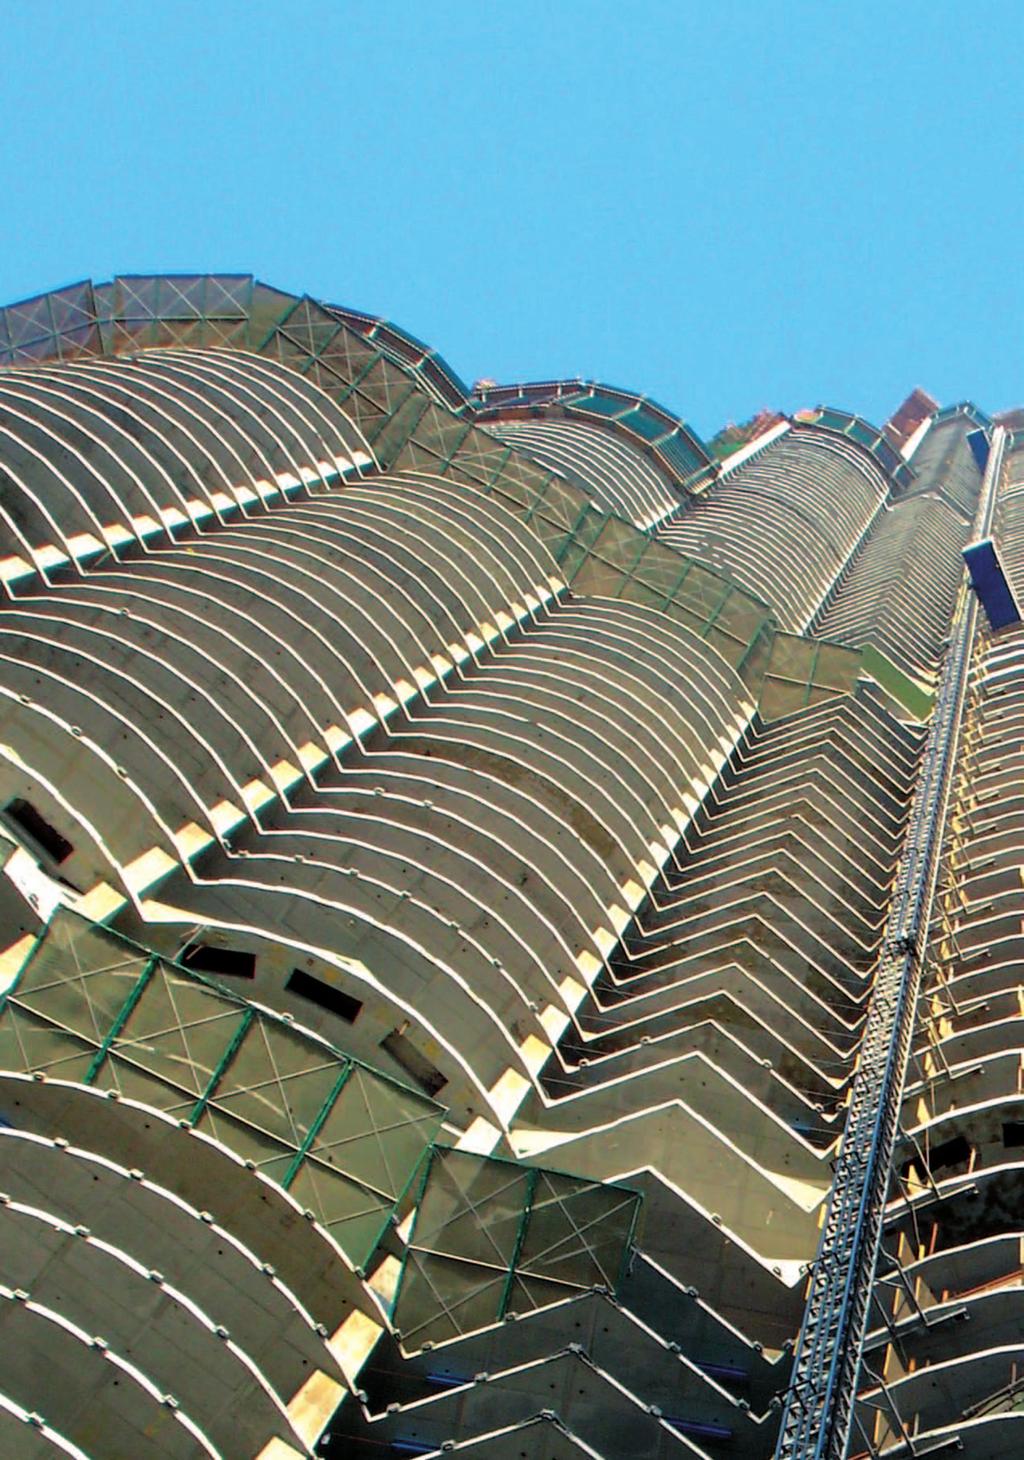 Burj Dubai Tower under construction PEGA 3240